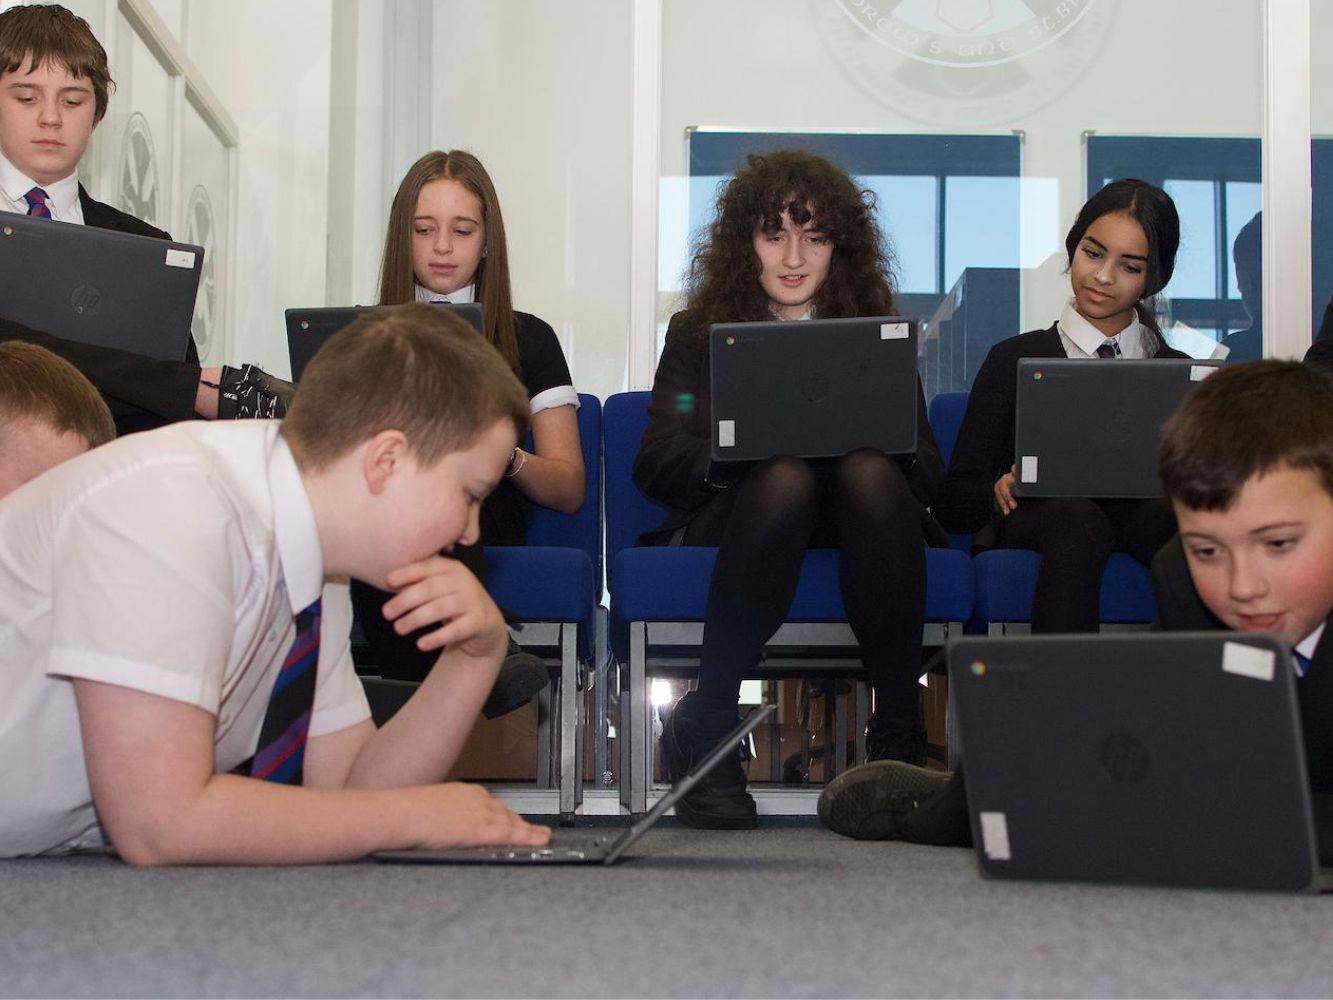 School pupils working on laptops